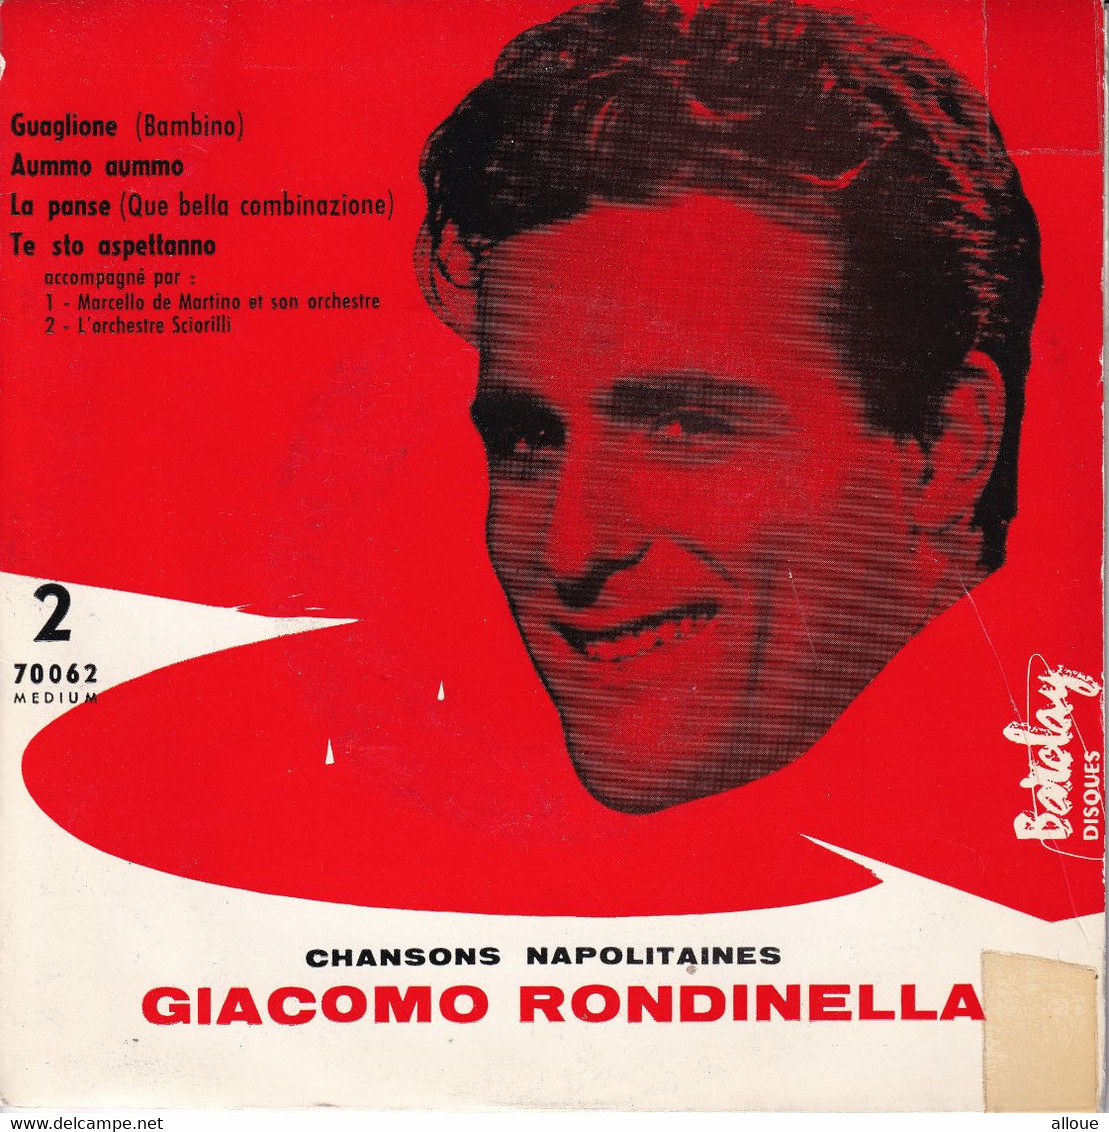 GIACOMO RONDINELLA - CHANSONS NAPOLITAINES - FR EP - GUAGLIONE ( BAMBINO) + 3 - World Music